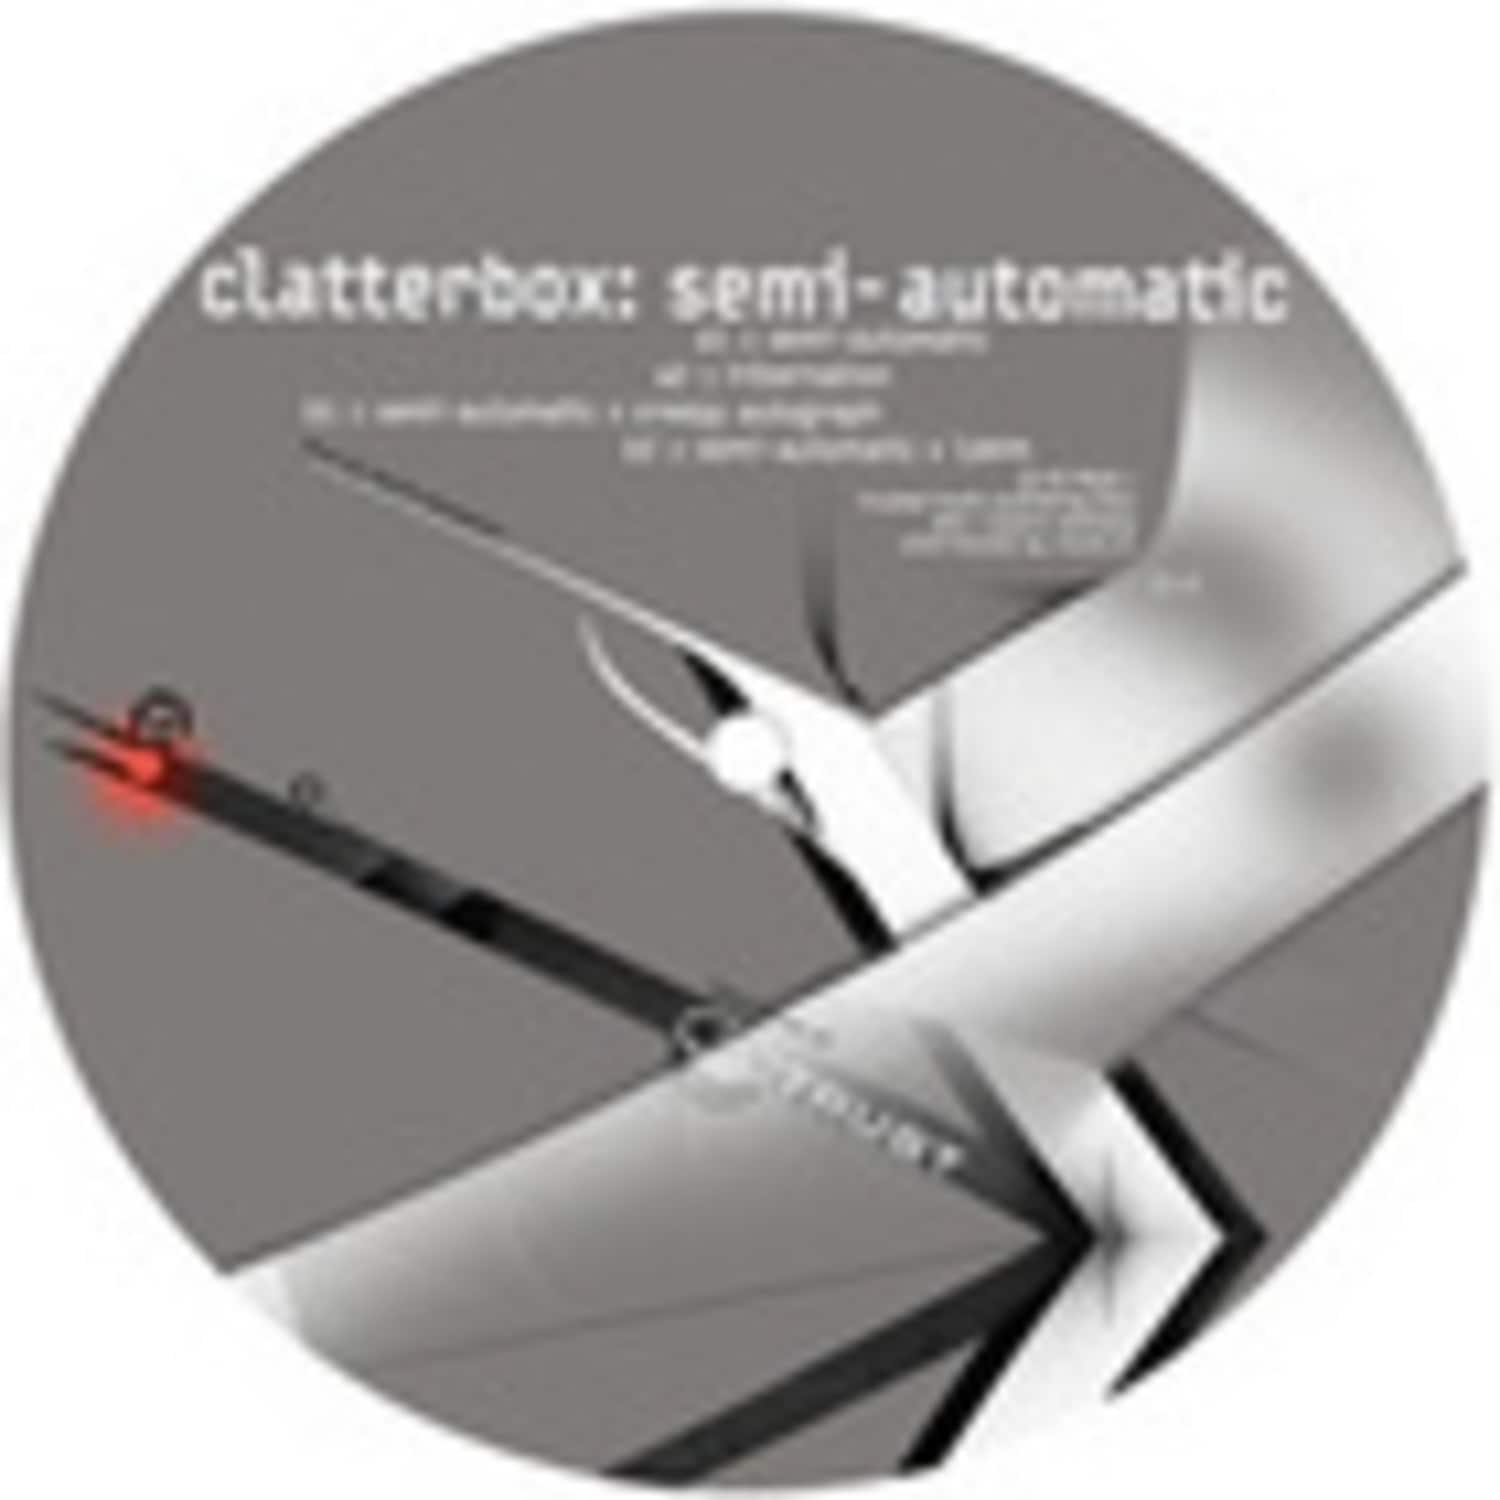 Clatterbox - SEMI-AUTOMATIC